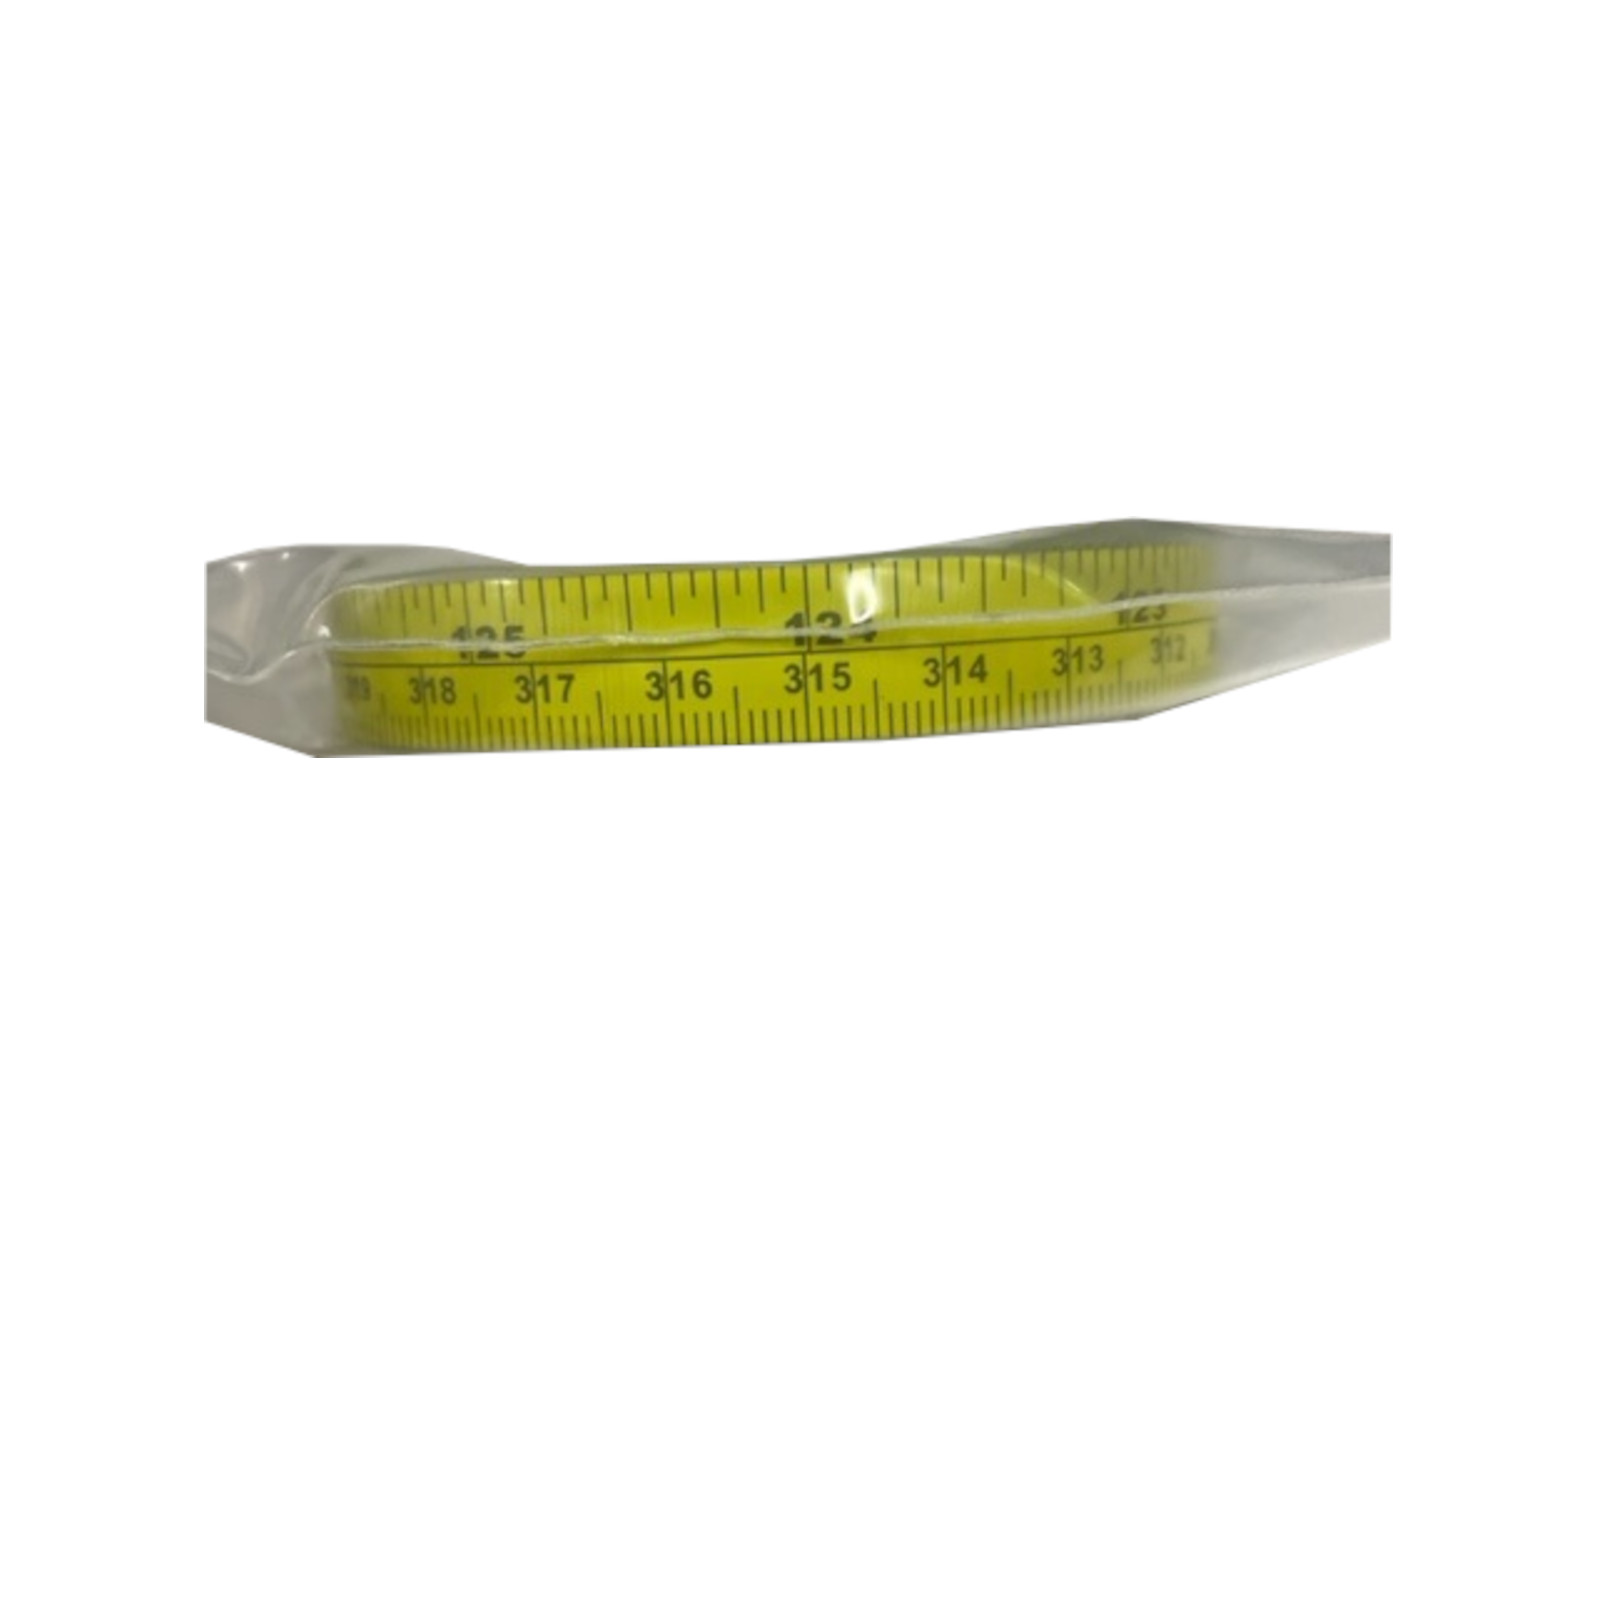 10505 - 10'6" Tape Measure